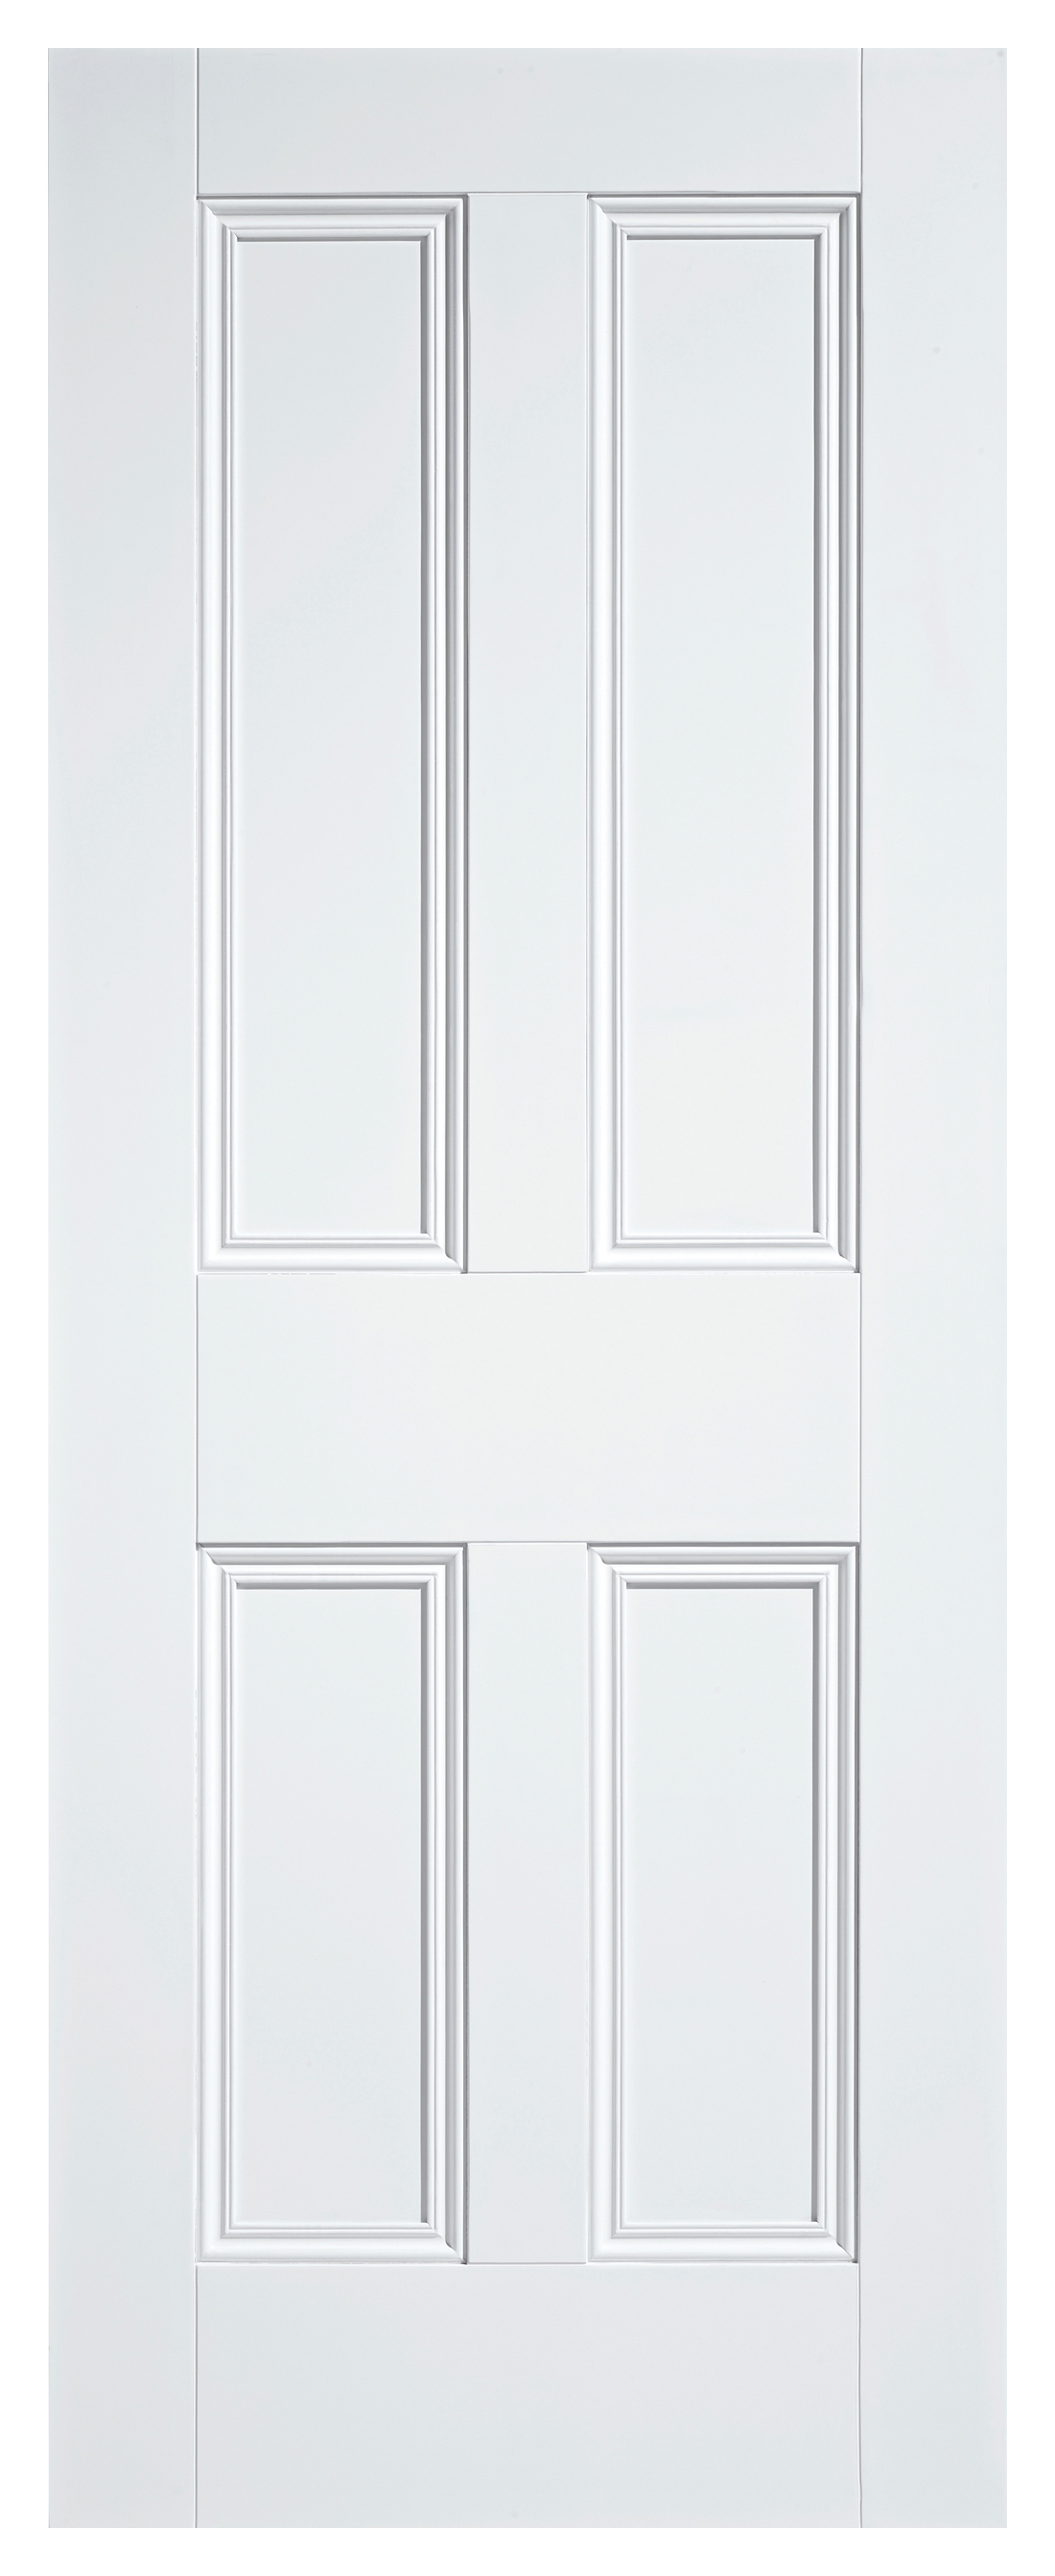 Image of LPD Internal 4 Panel Primed White Solid Core Door - 610 x 1981mm